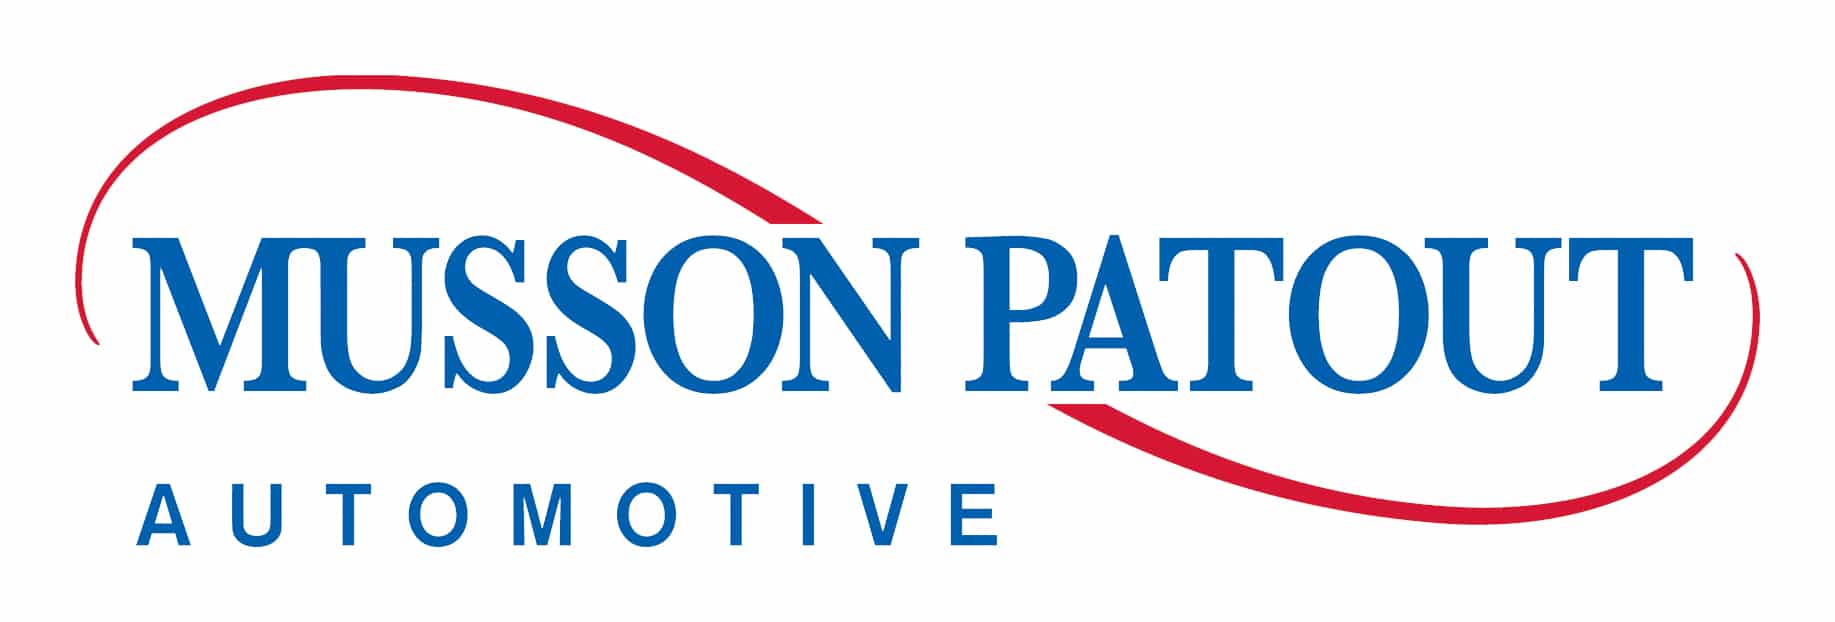 Musson Patout Museum Platinum Sponsors